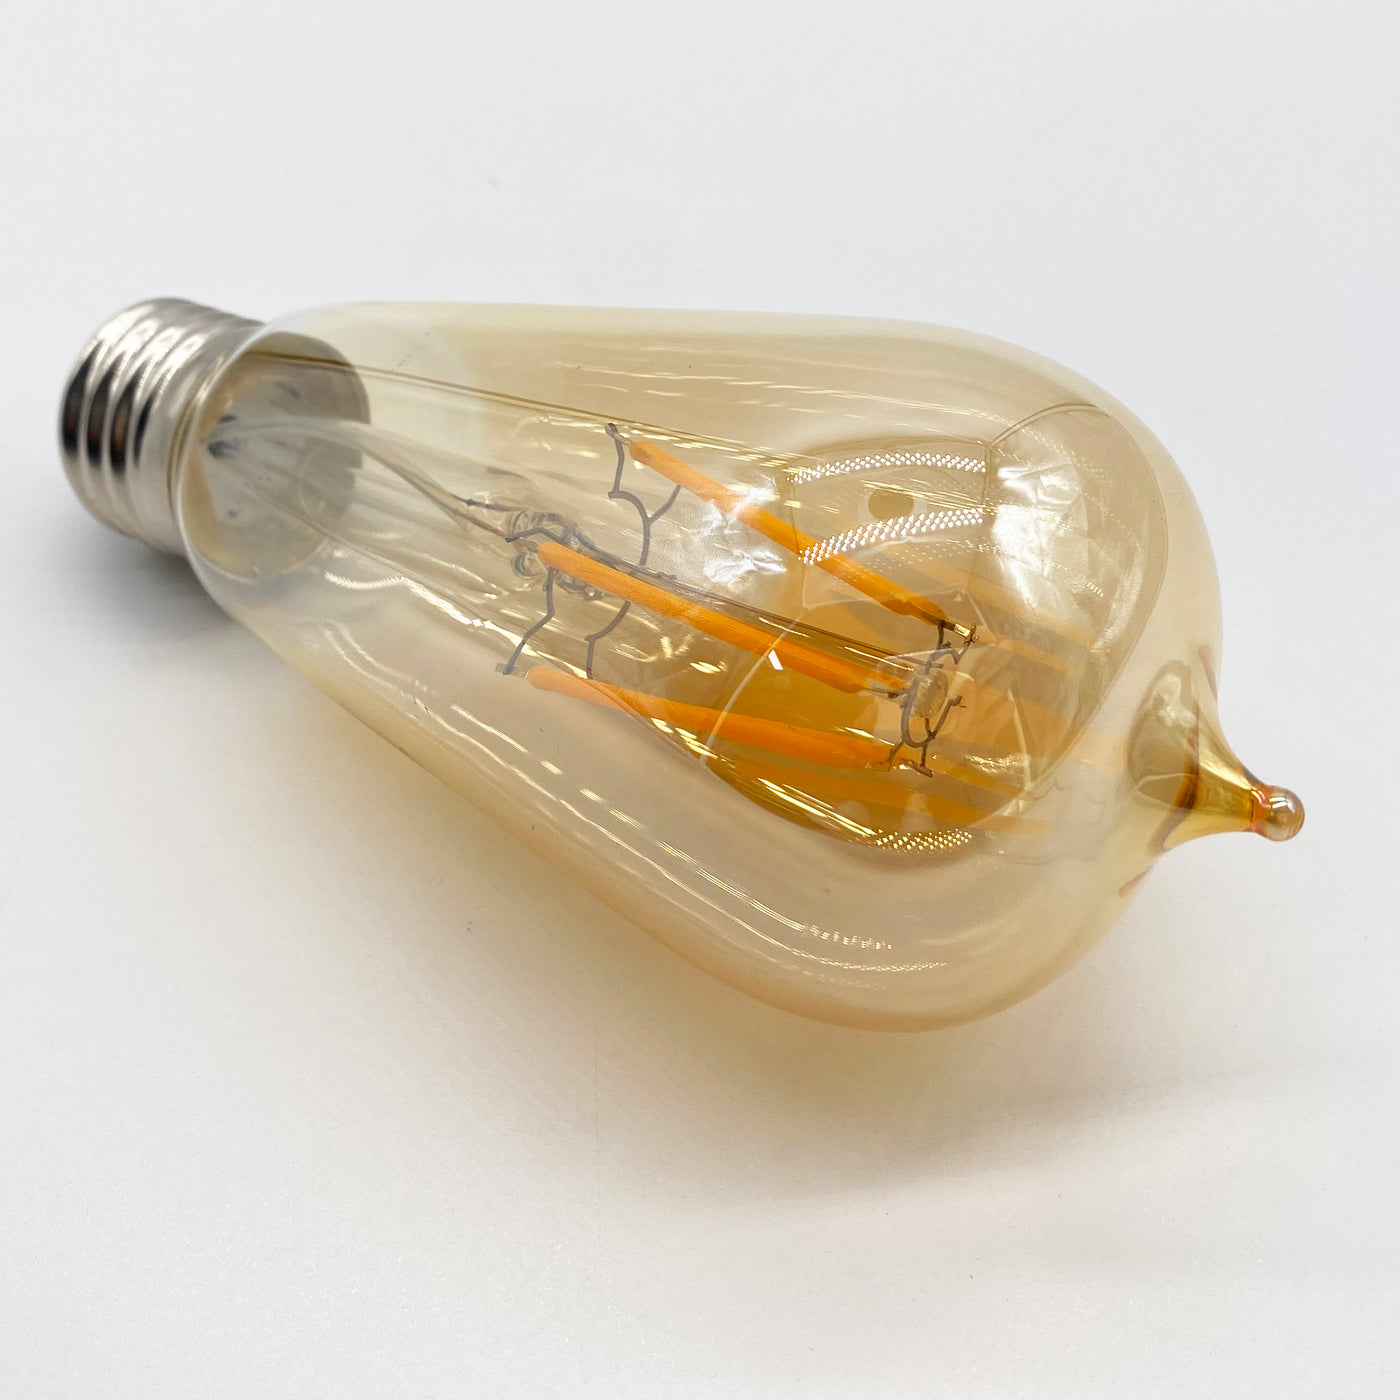 ST58 Amber tint bulbs